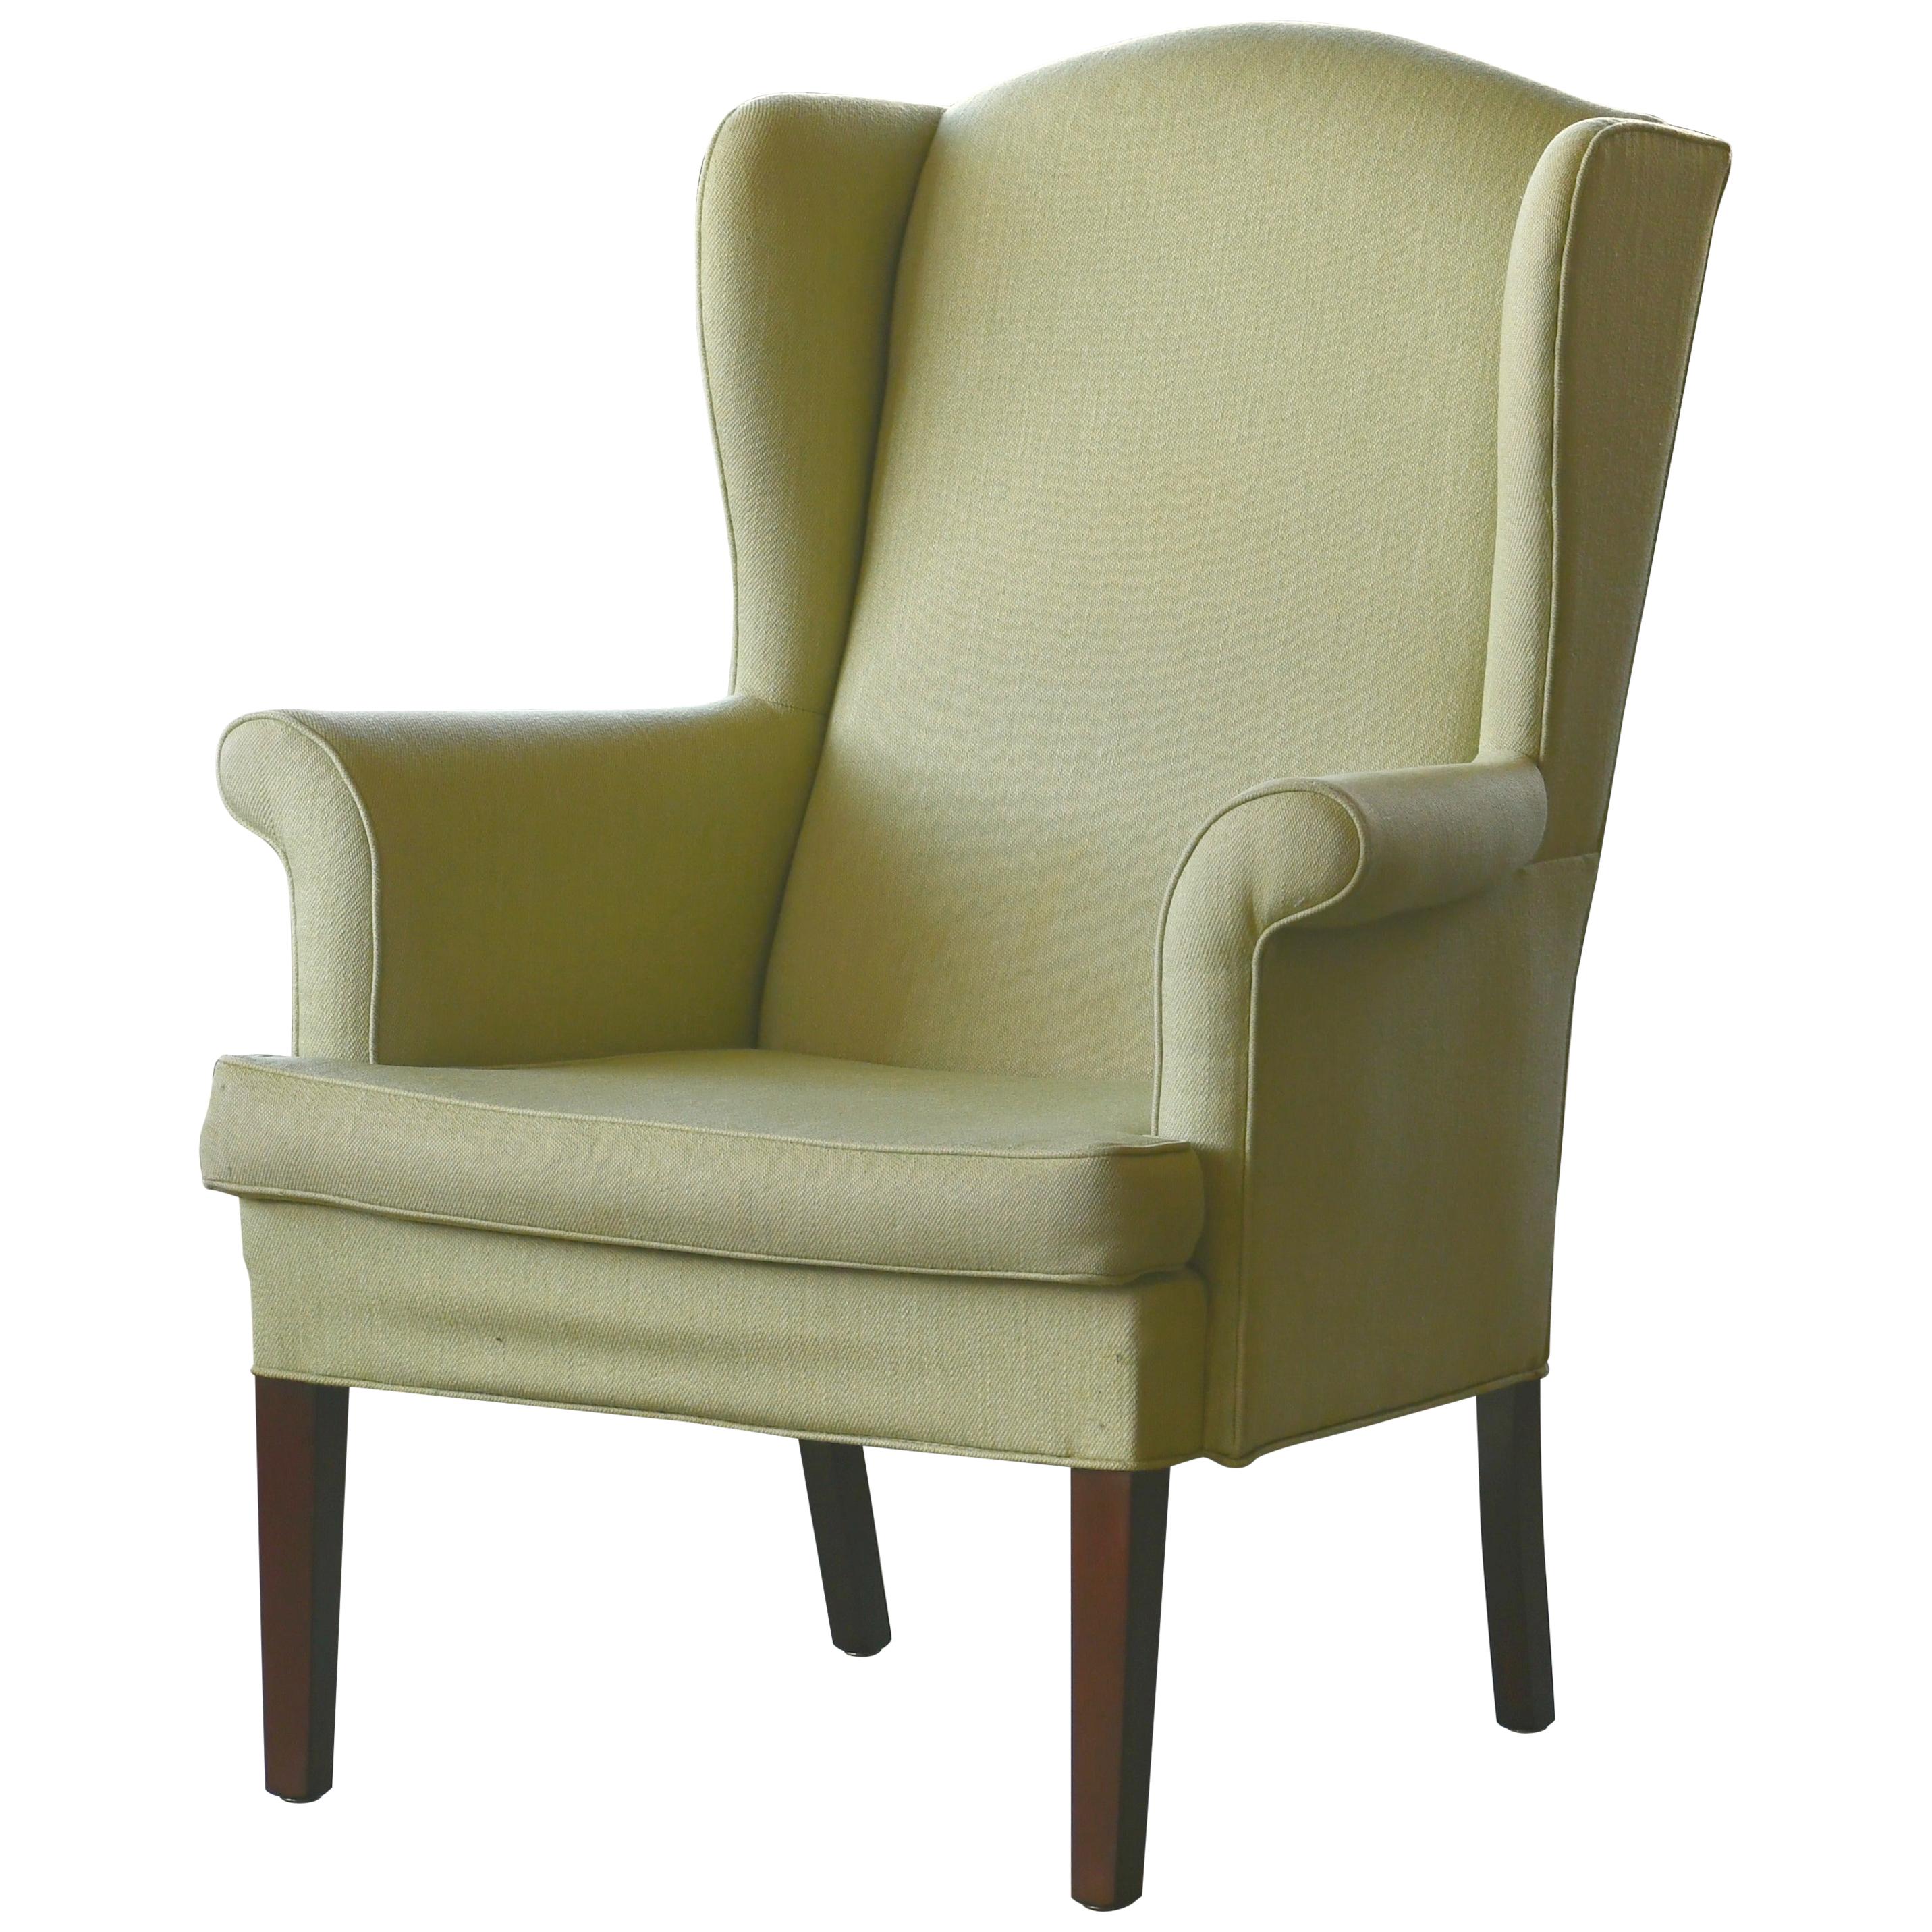 Classic Danish Midcentury Wingback Chair in Light Green Wool